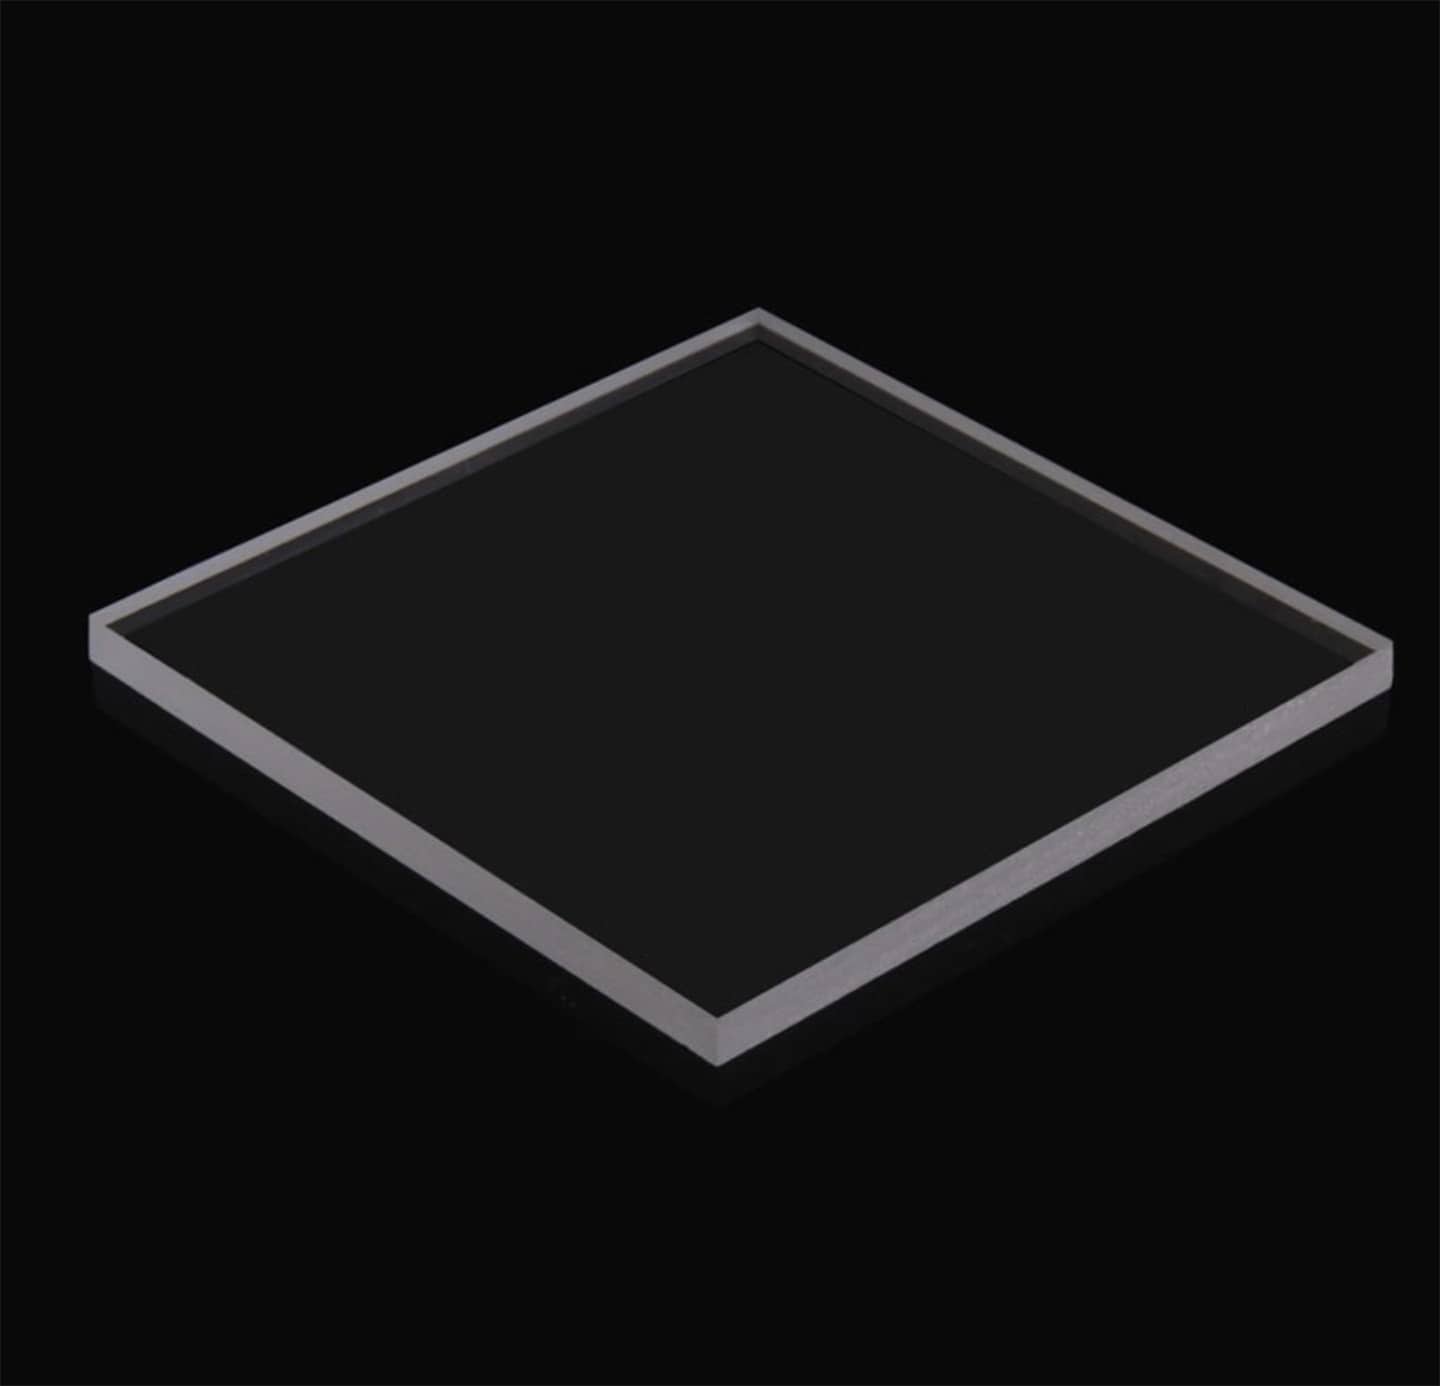 Pressure plate, acrylic transparent tile tool